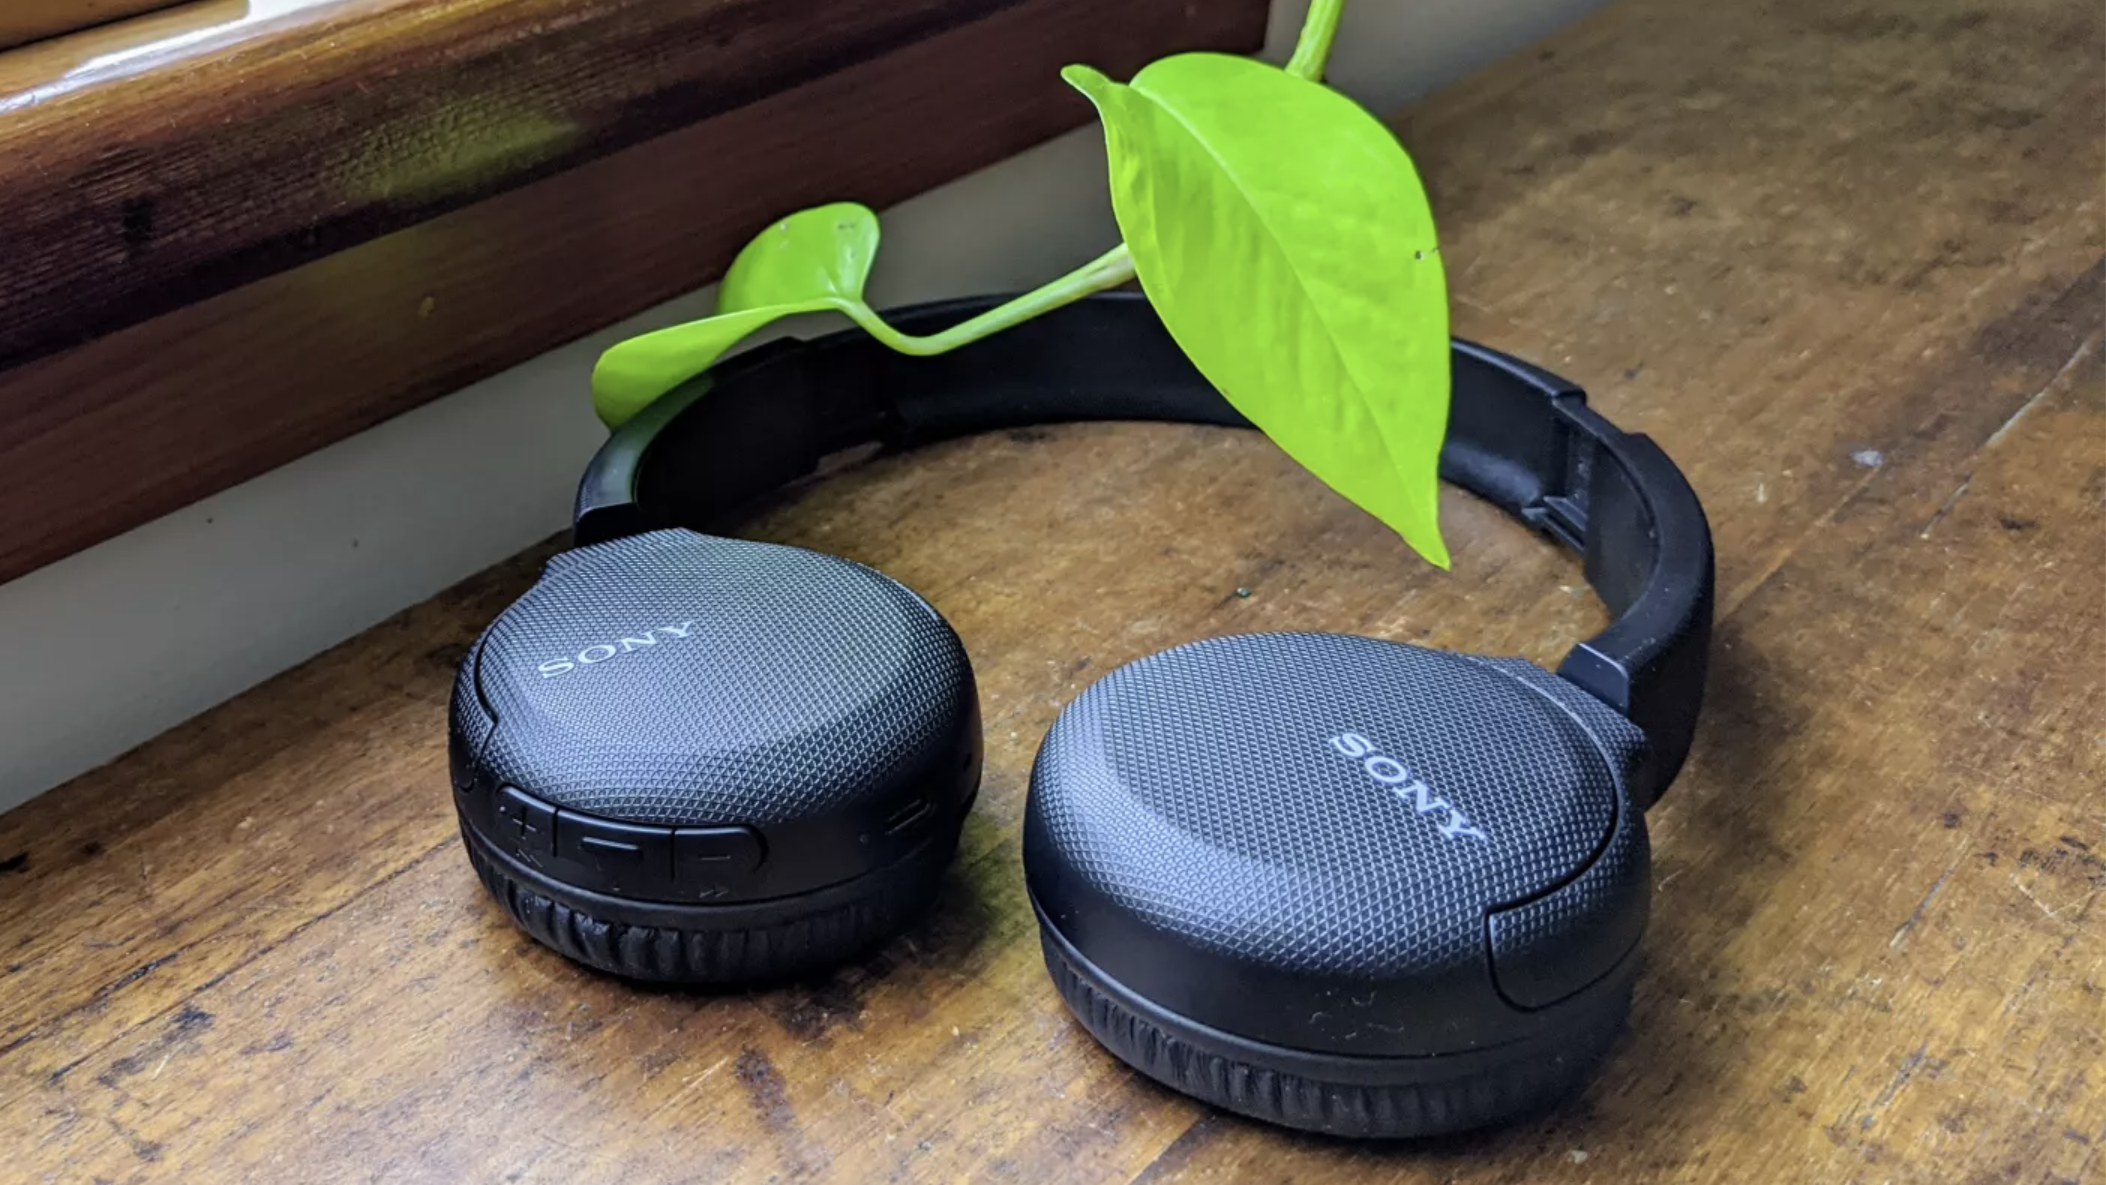 Sony WH-CH510 wireless headphones